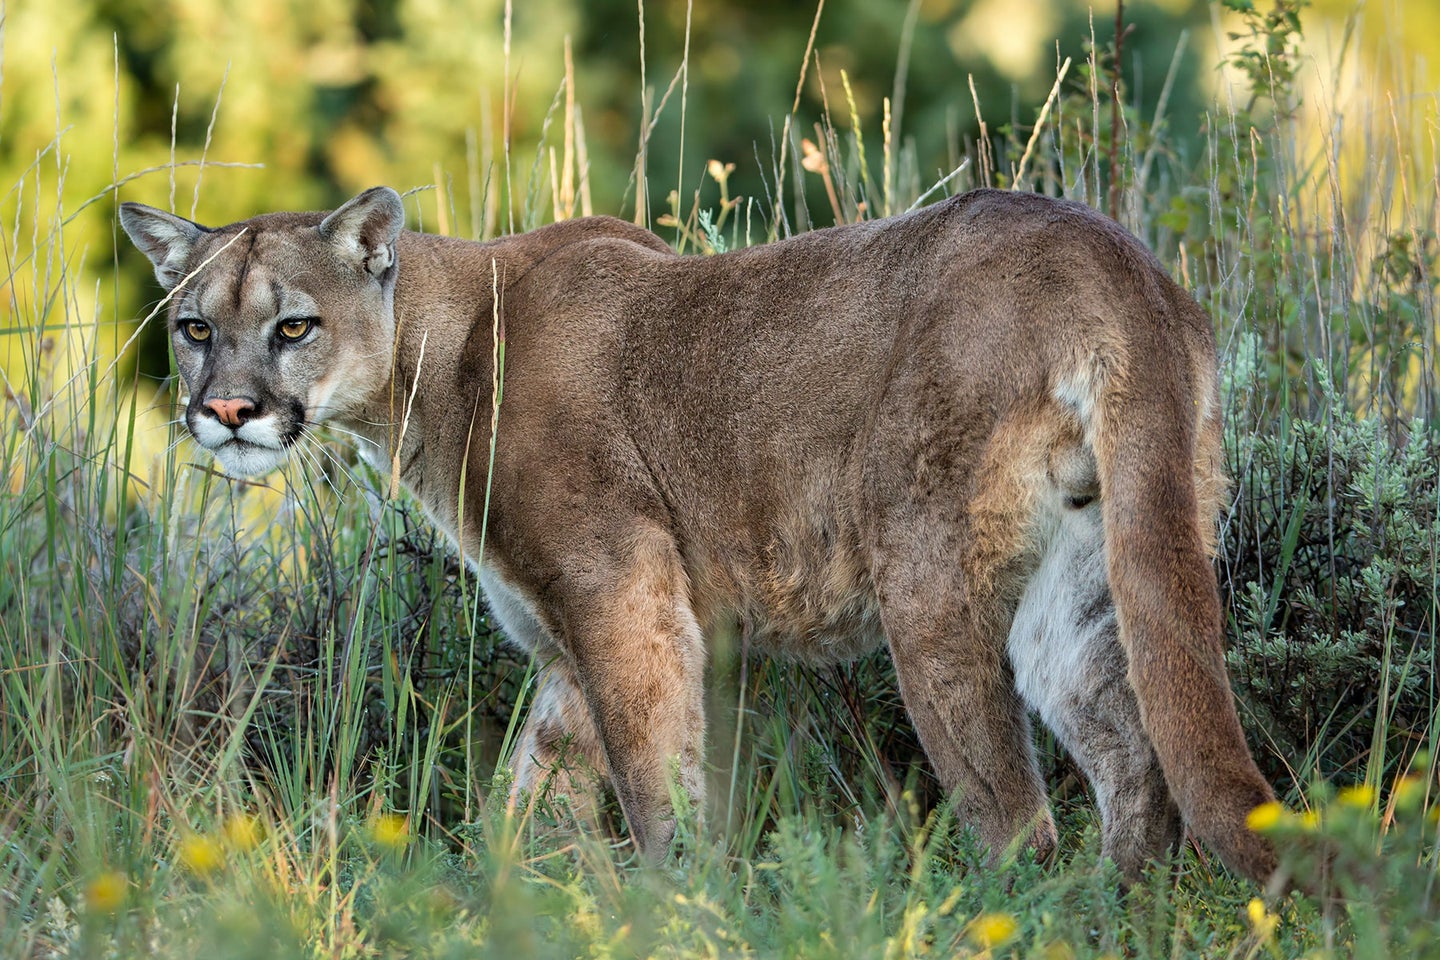 A mountain lion prowls through tall grass.